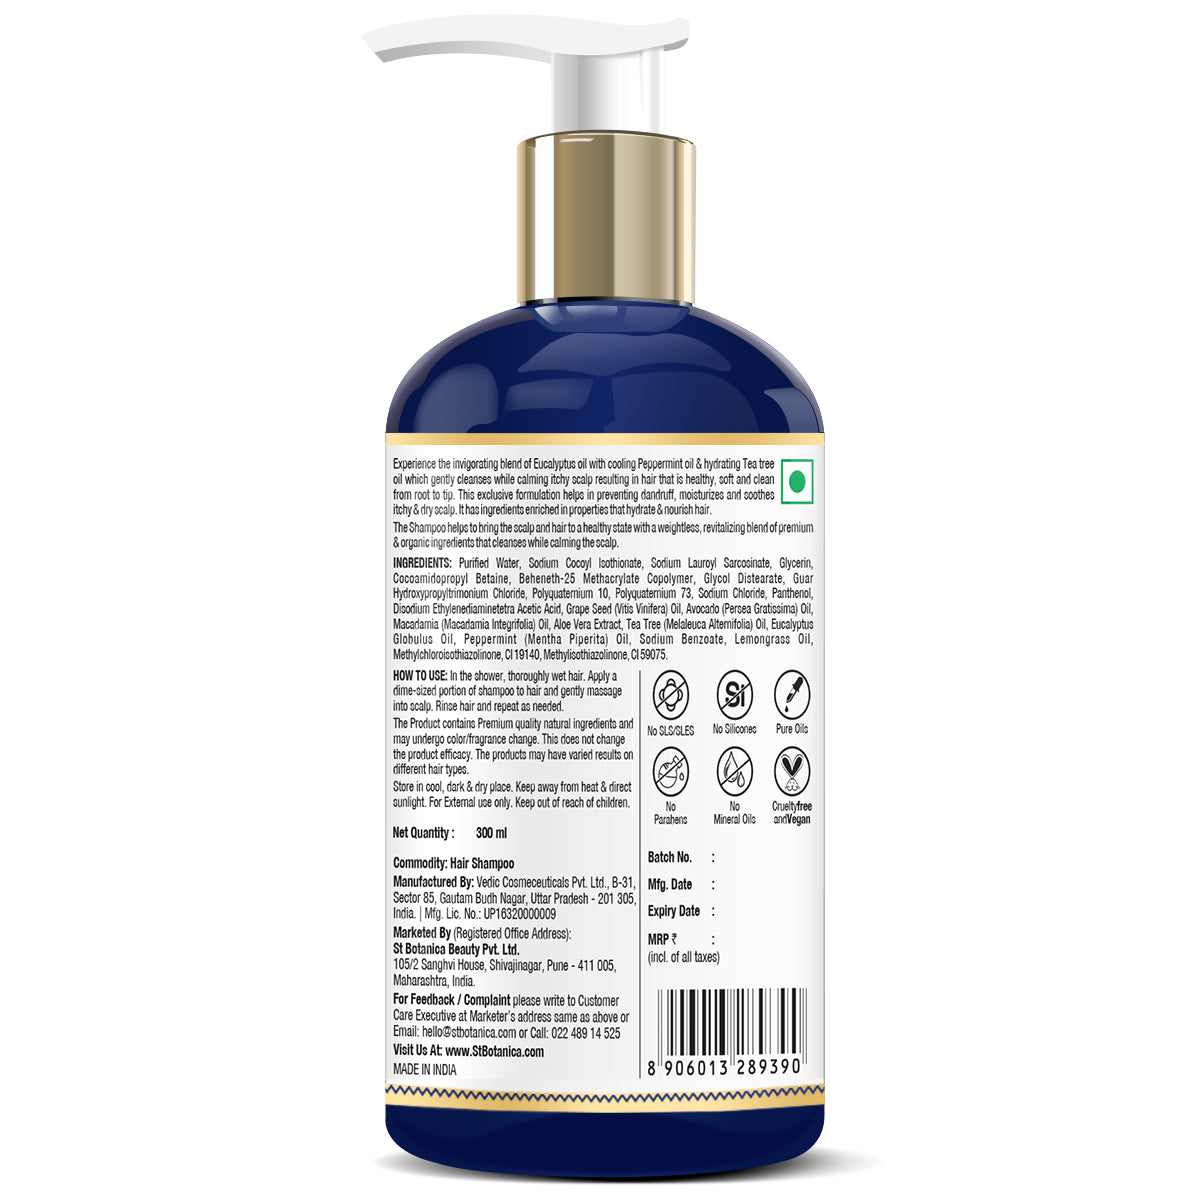 St.Botanica Eucalyptus & Tea Tree Oil Hair Repair Shampoo - 300ml - No SLS/Sulphate, No Parabens, No Silicon